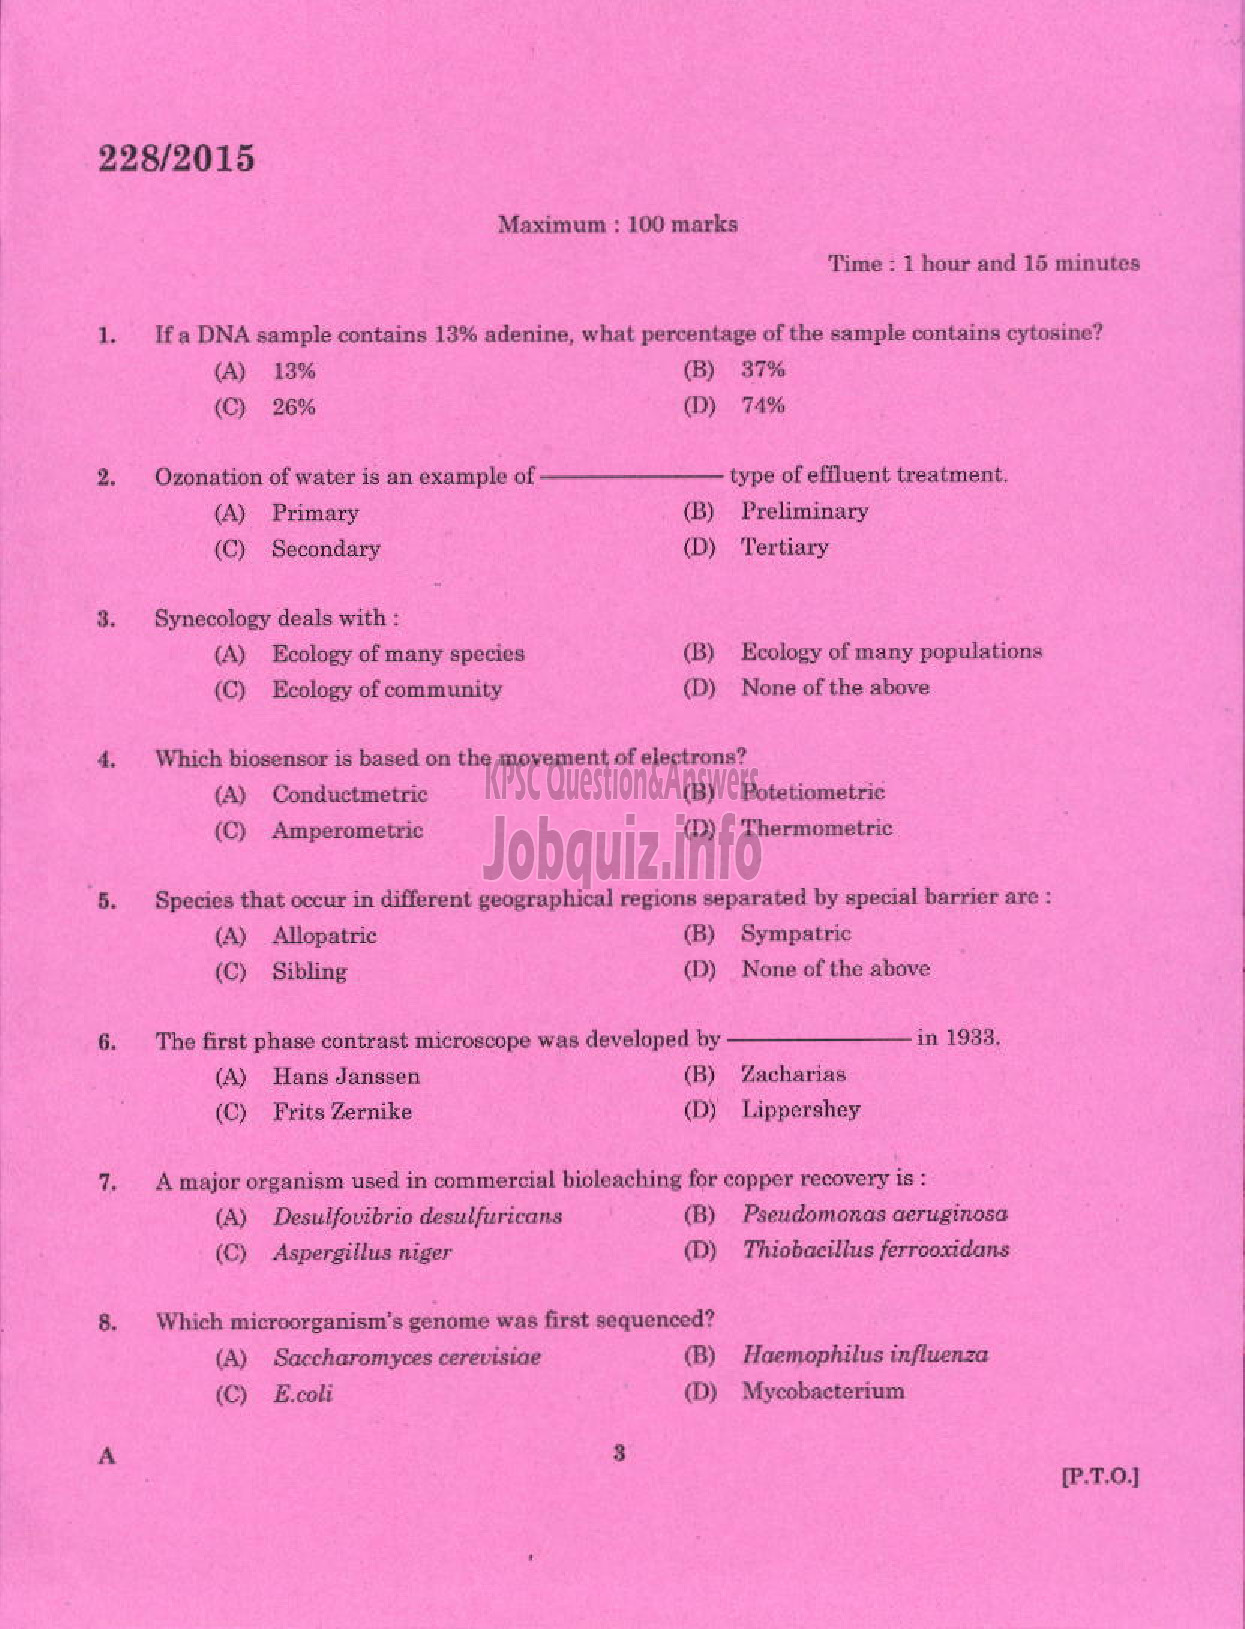 Kerala PSC Question Paper - MICROBIOLOGIST PHARMACEUTICAL CORPORATION IM KERALA LTD-1